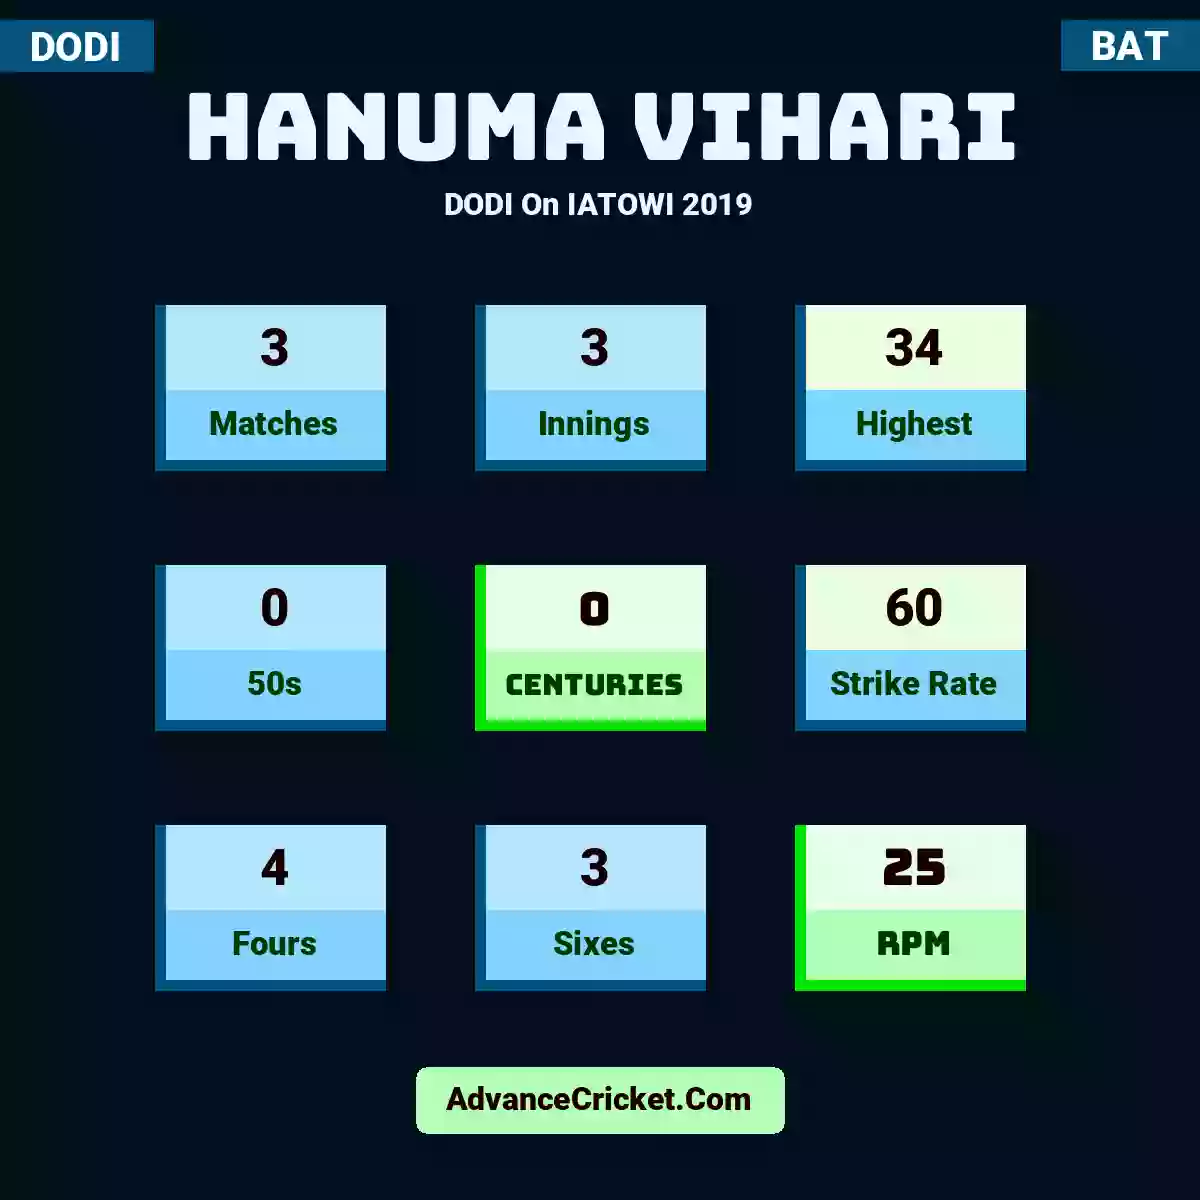 Hanuma Vihari DODI  On IATOWI 2019, Hanuma Vihari played 3 matches, scored 34 runs as highest, 0 half-centuries, and 0 centuries, with a strike rate of 60. H.Vihari hit 4 fours and 3 sixes, with an RPM of 25.